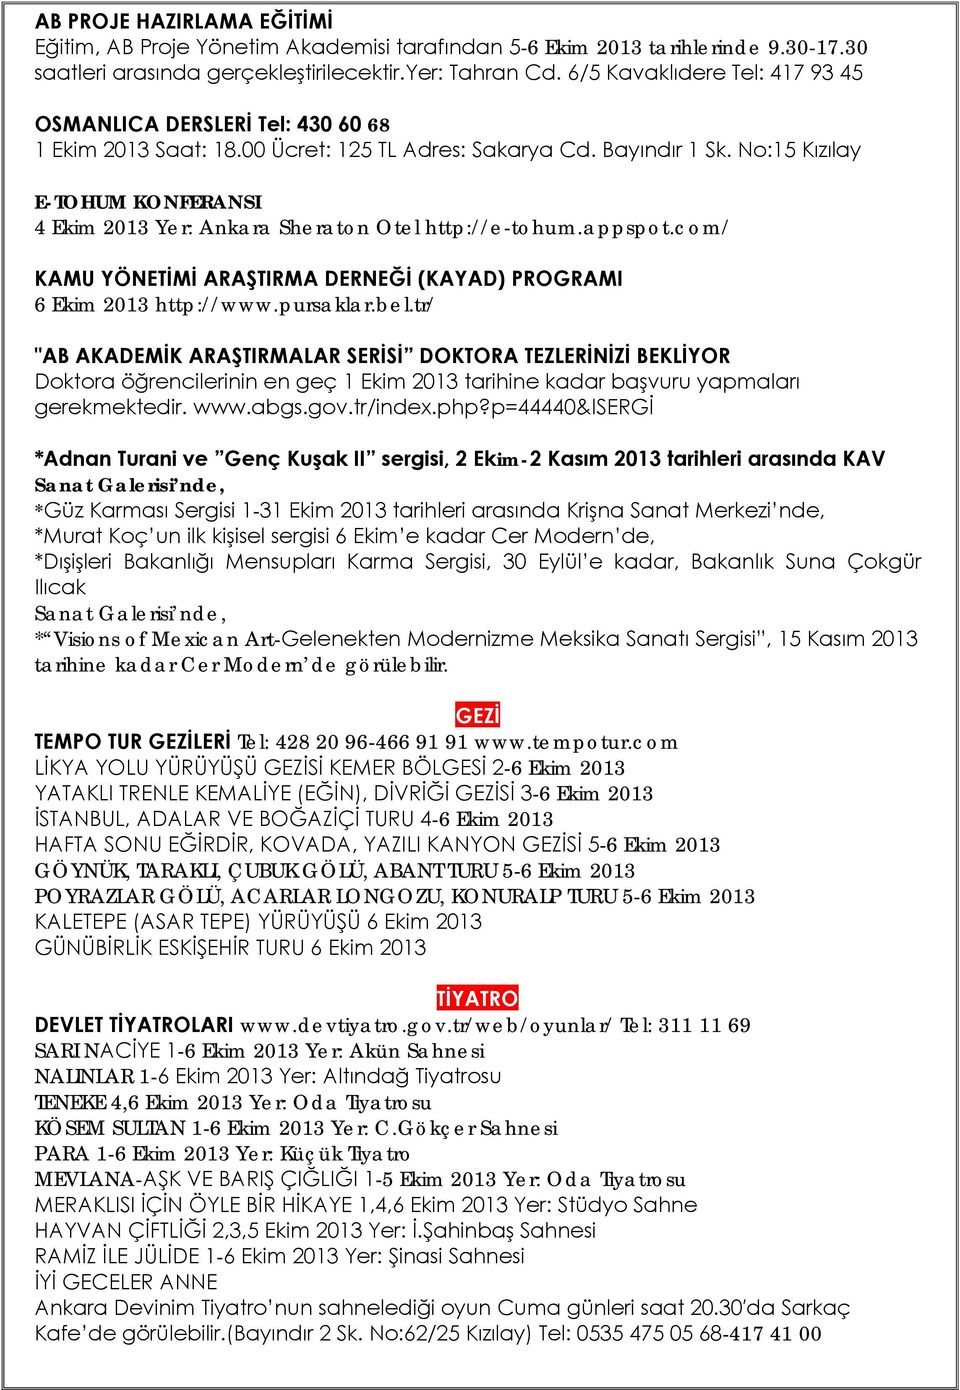 No:15 Kızılay E-TOHUM KONFERANSI 4 Ekim 2013 Yer: Ankara Sheraton Otel http://e-tohum.appspot.com/ KAMU YÖNETİMİ ARAŞTIRMA DERNEĞİ (KAYAD) PROGRAMI 6 Ekim 2013 http://www.pursaklar.bel.